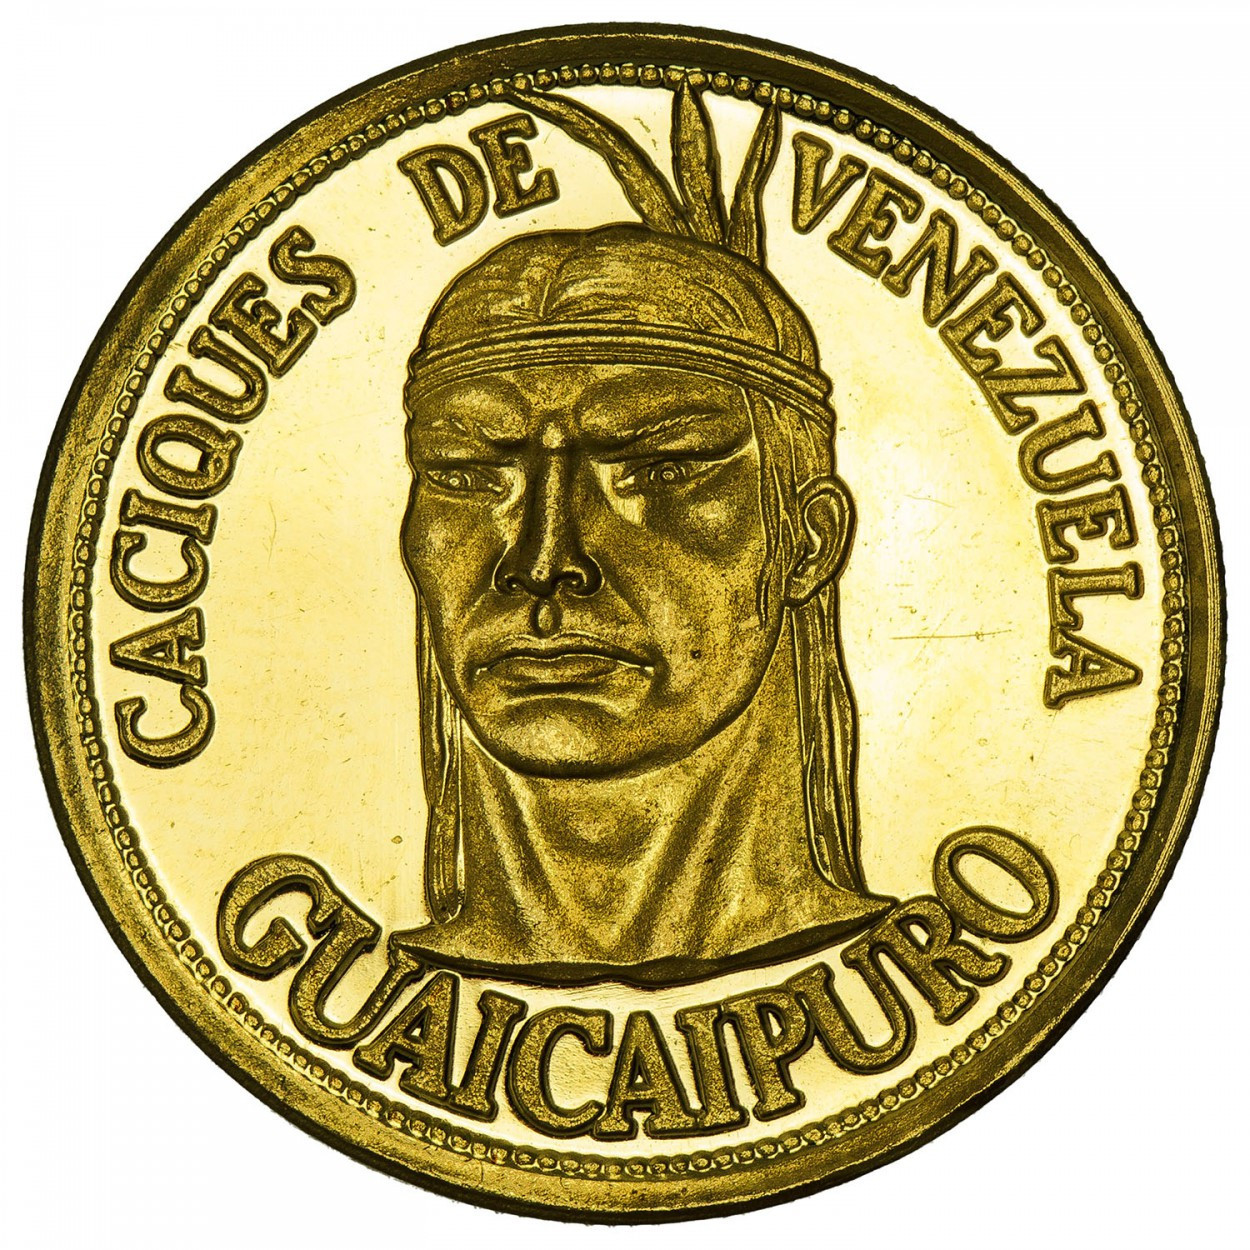 Venezuela - Caciques - Guaicaipuro avers